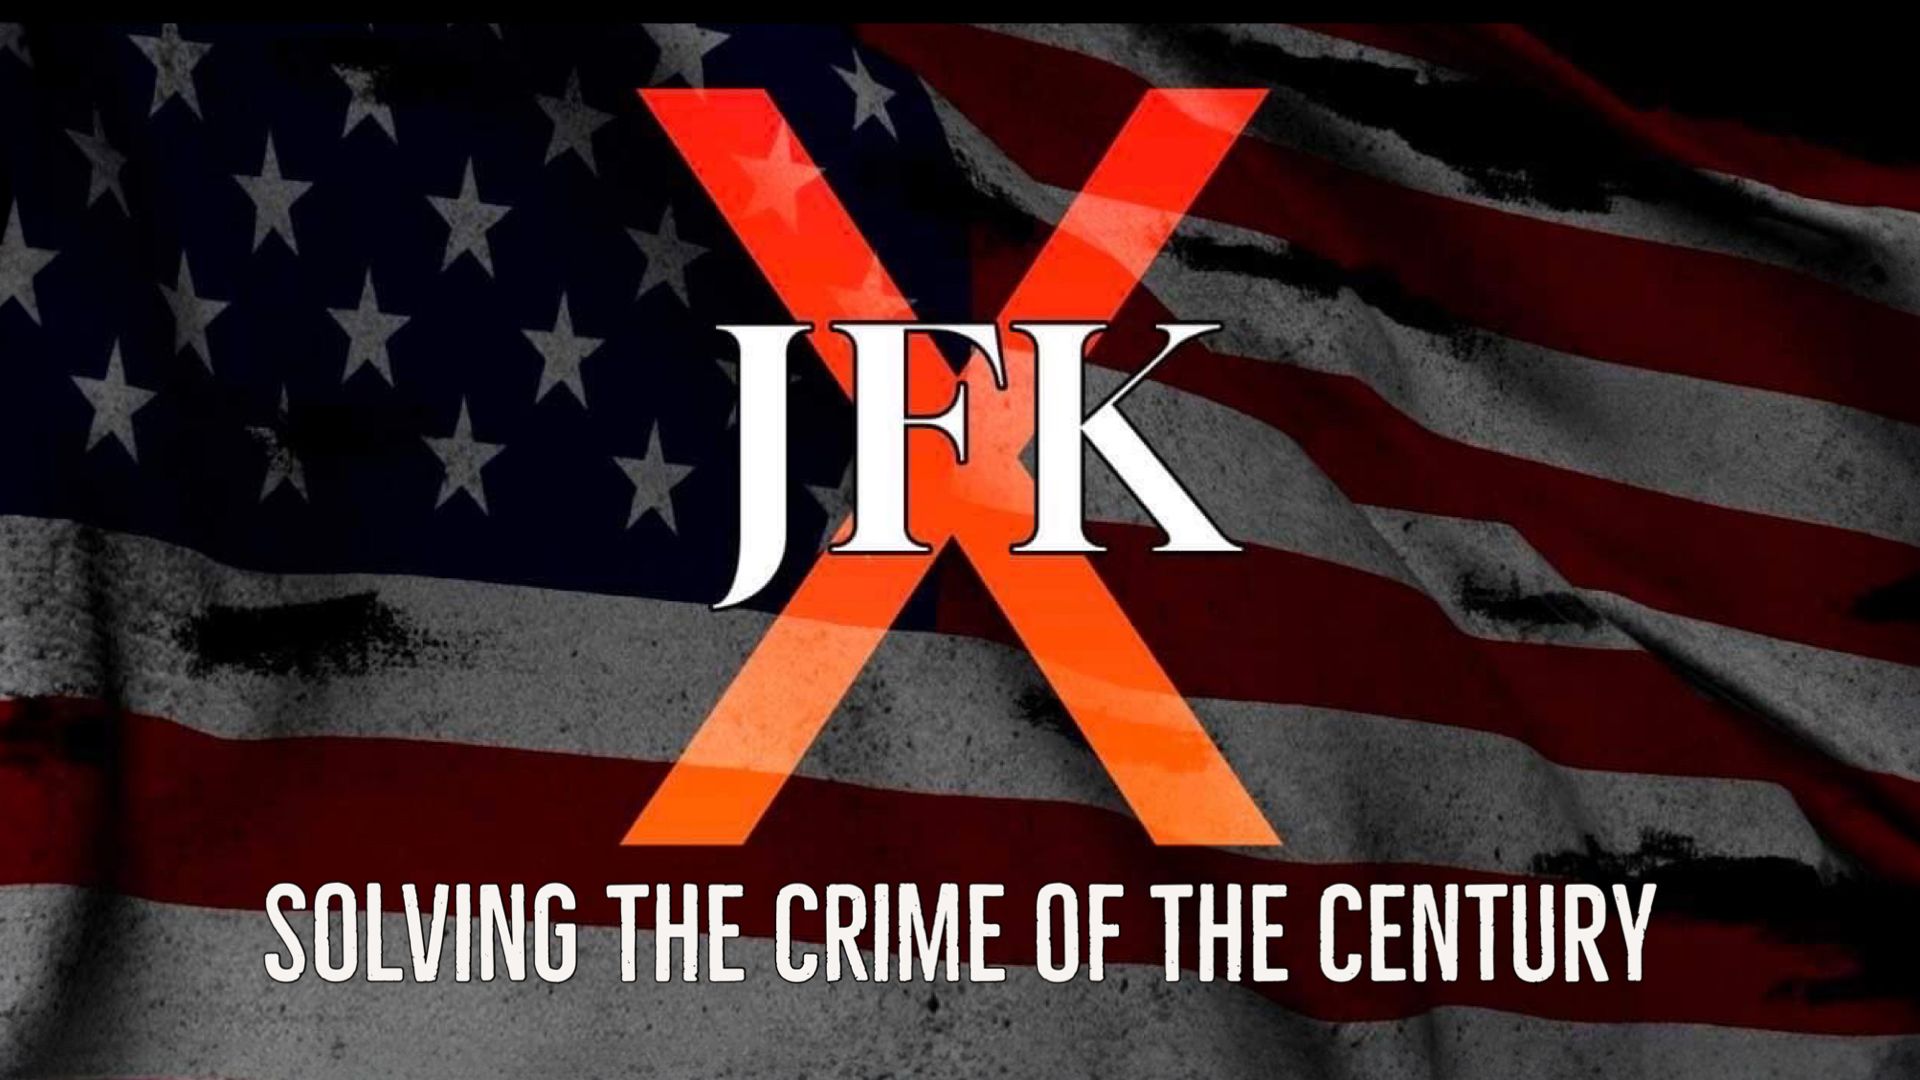 JFK X: Solving the Crime of the Century